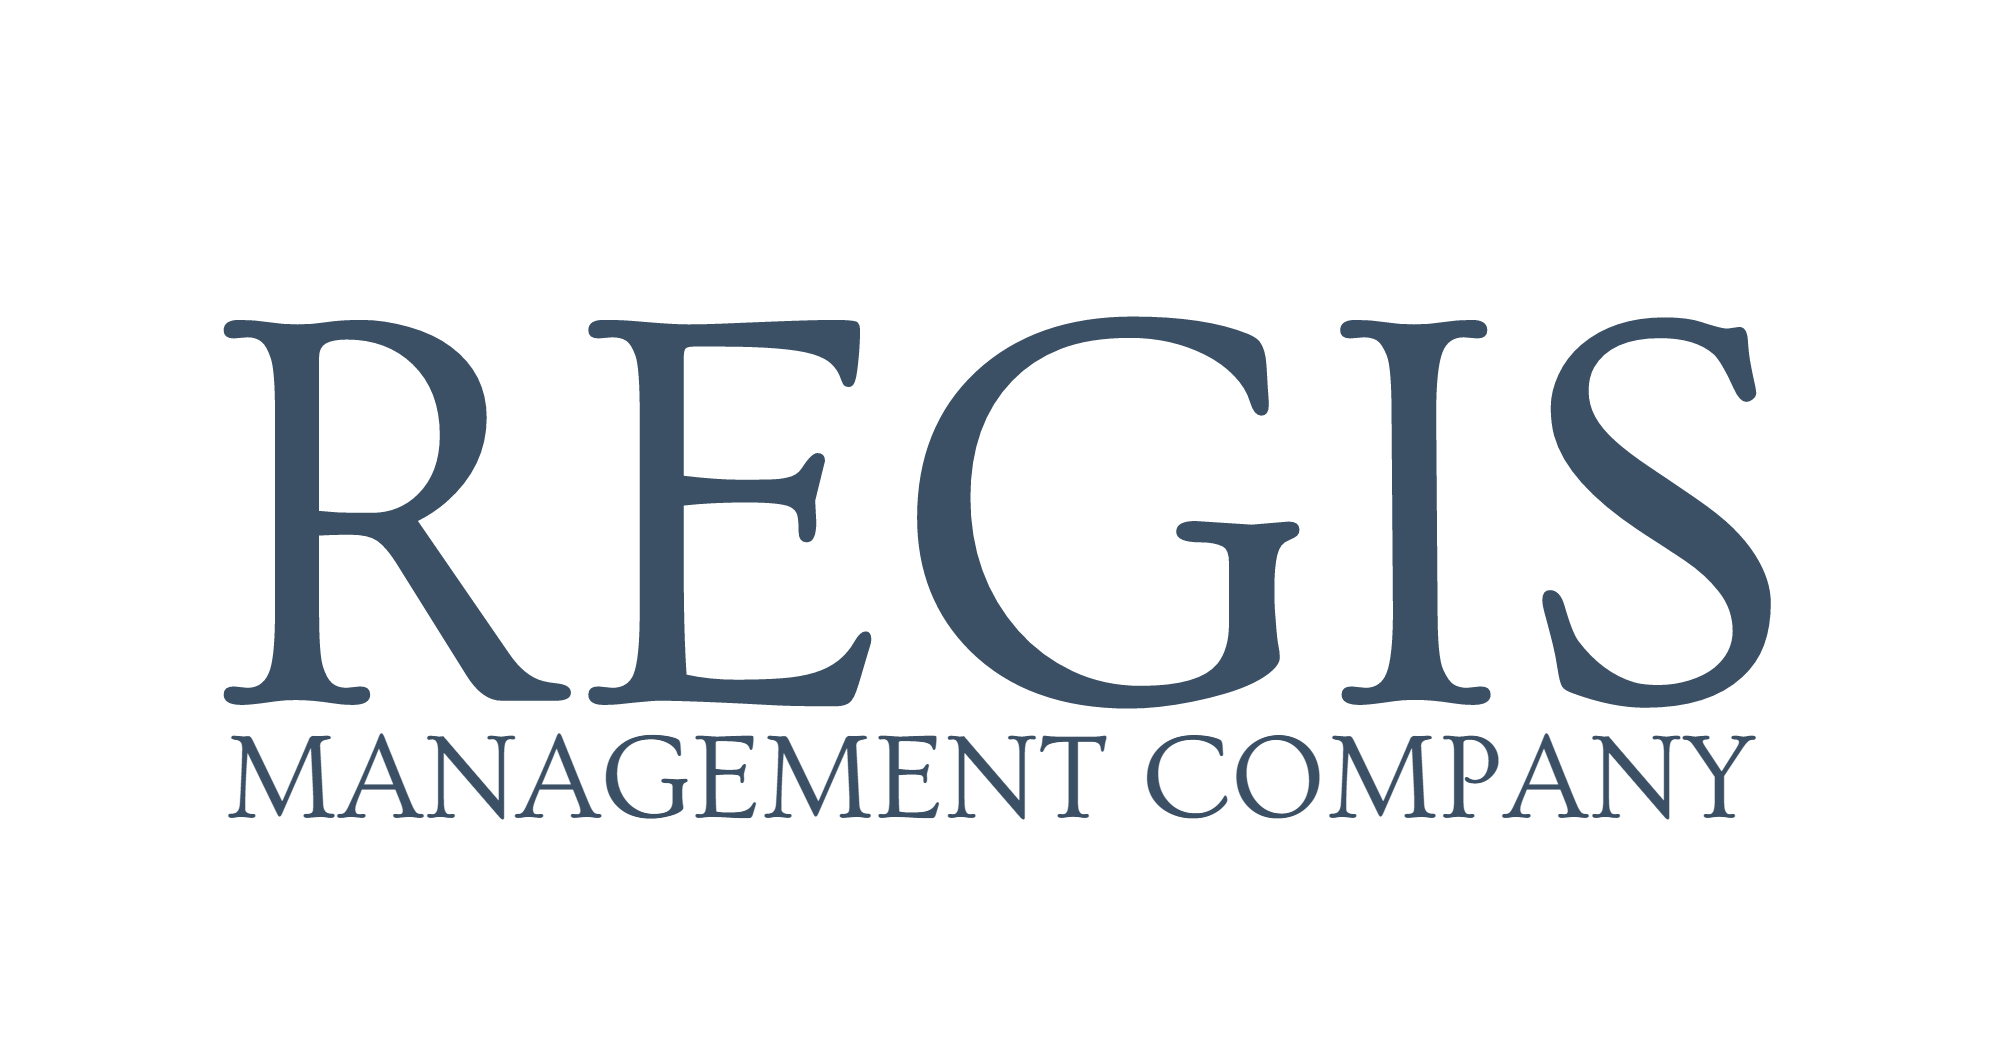 Regis Management Company